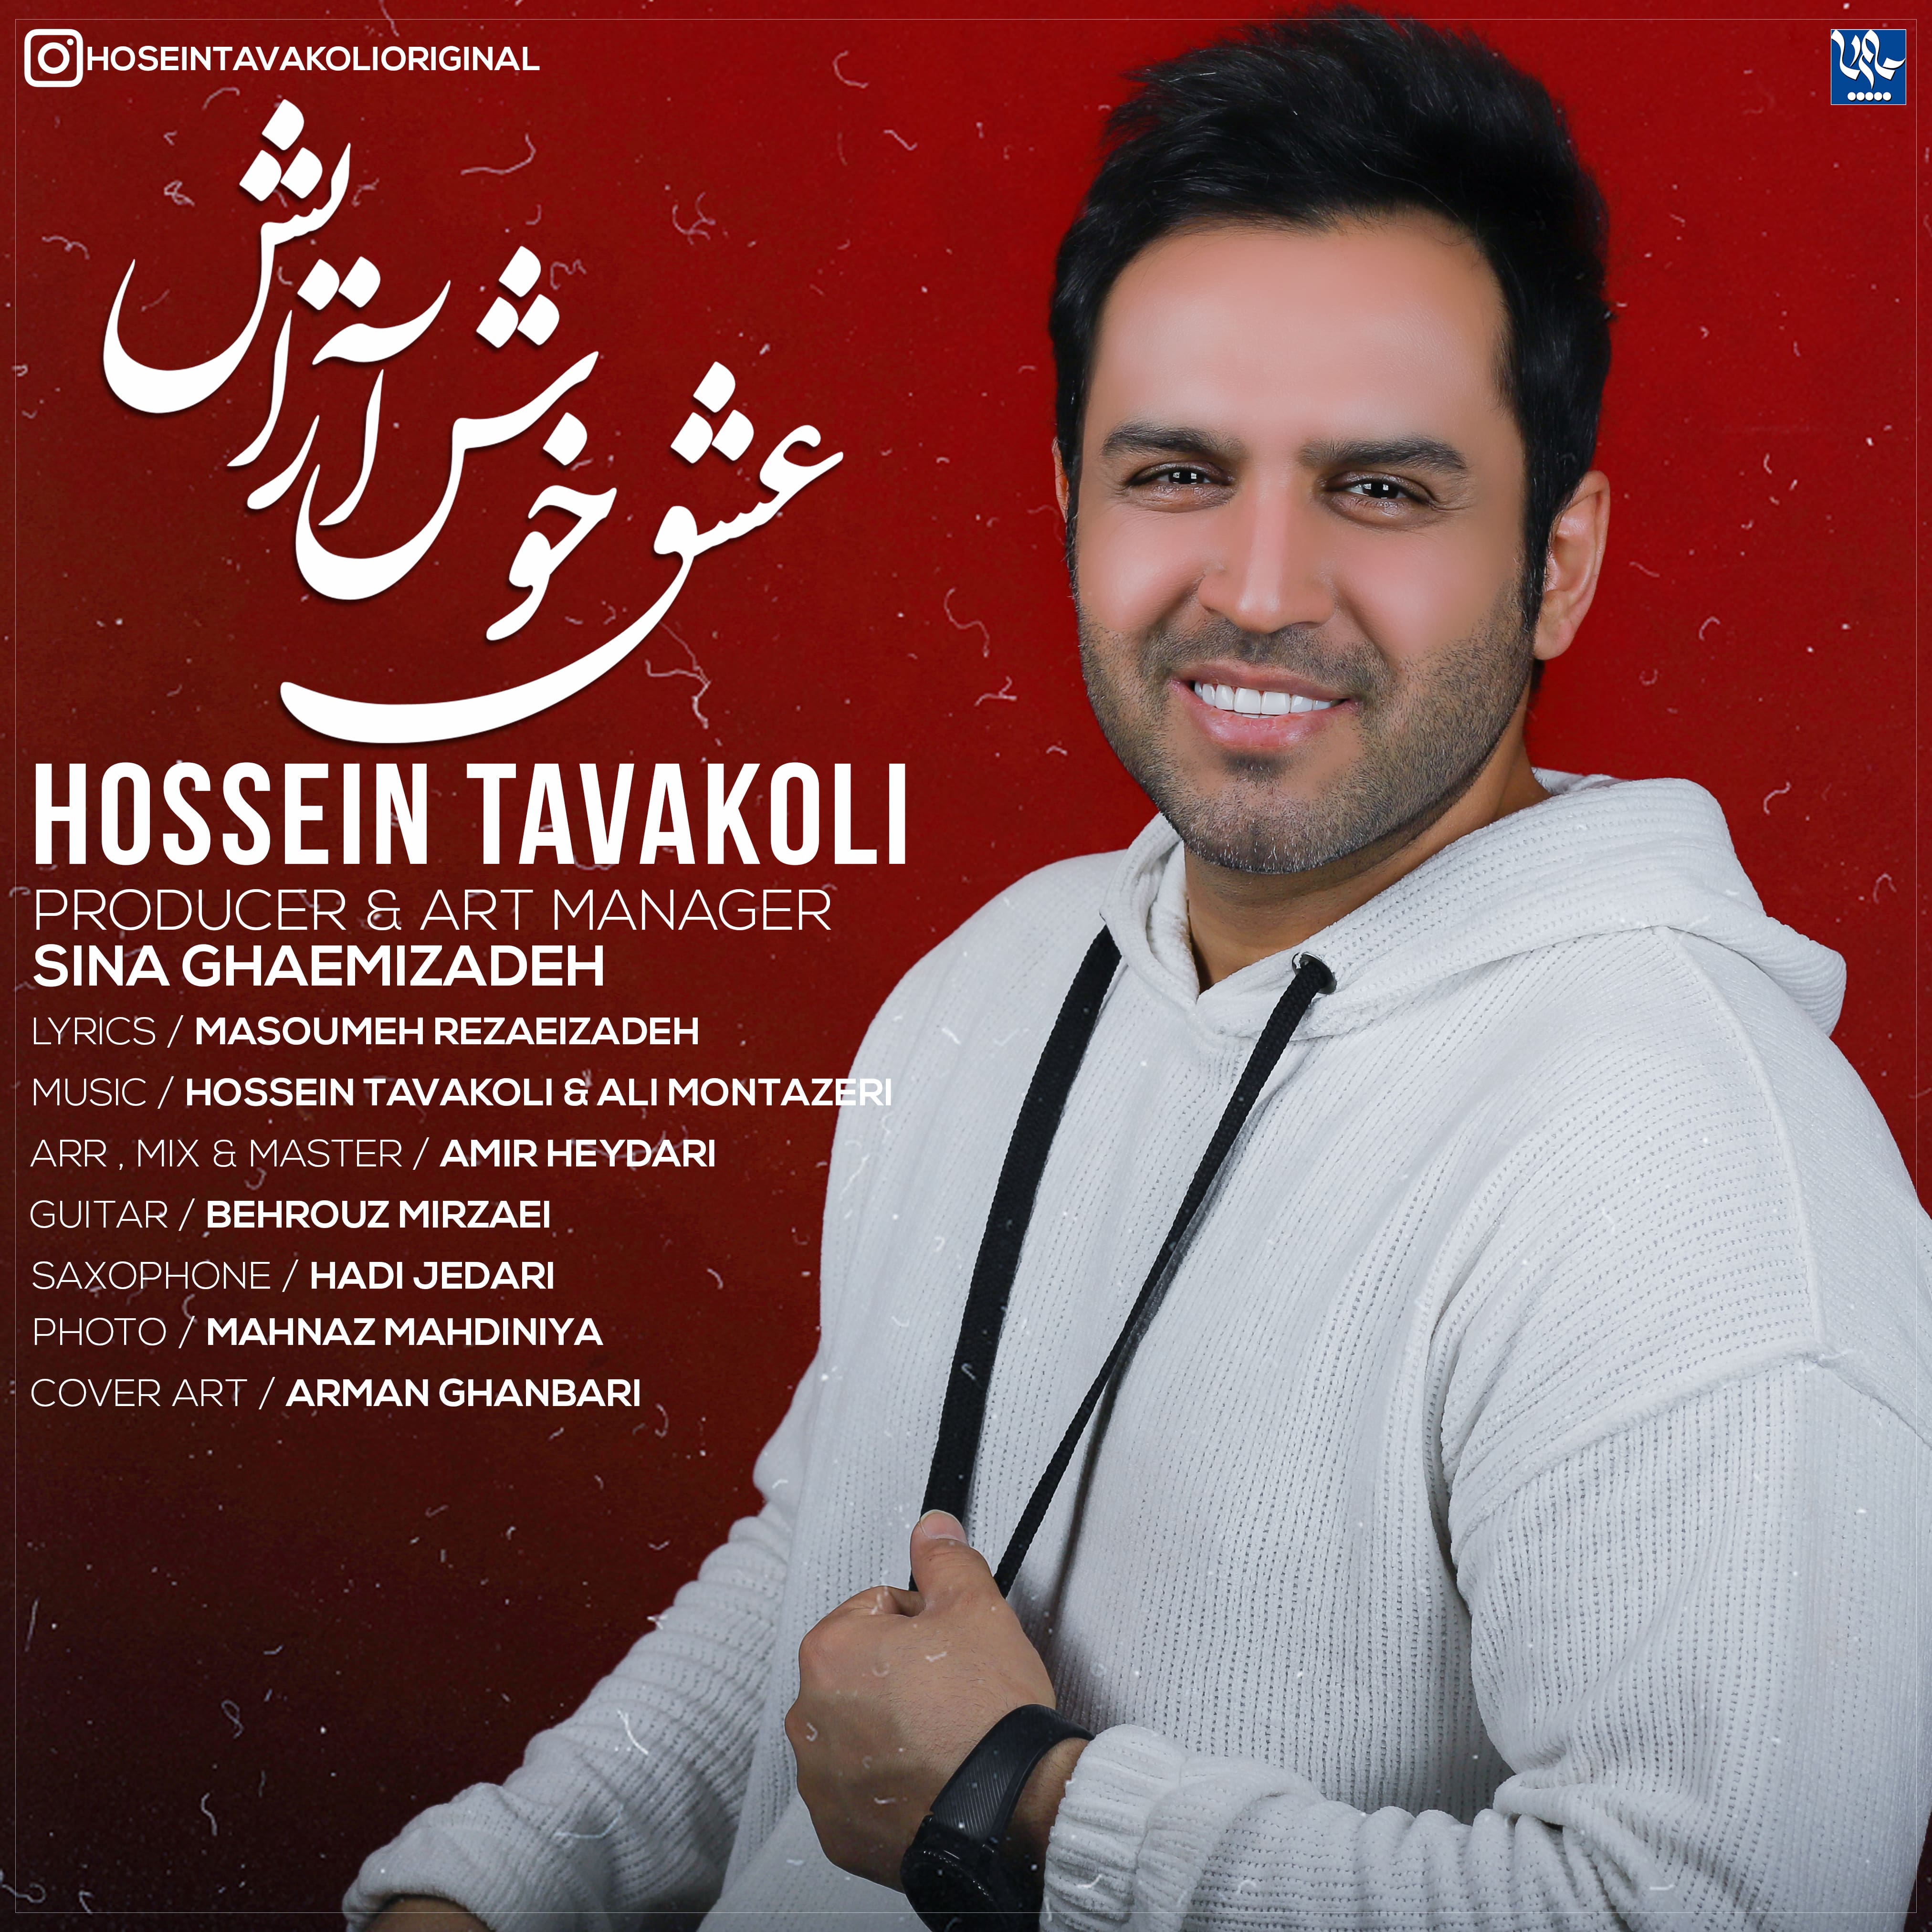 Hossein Tavakoli Eshghe khosh Arayesh 